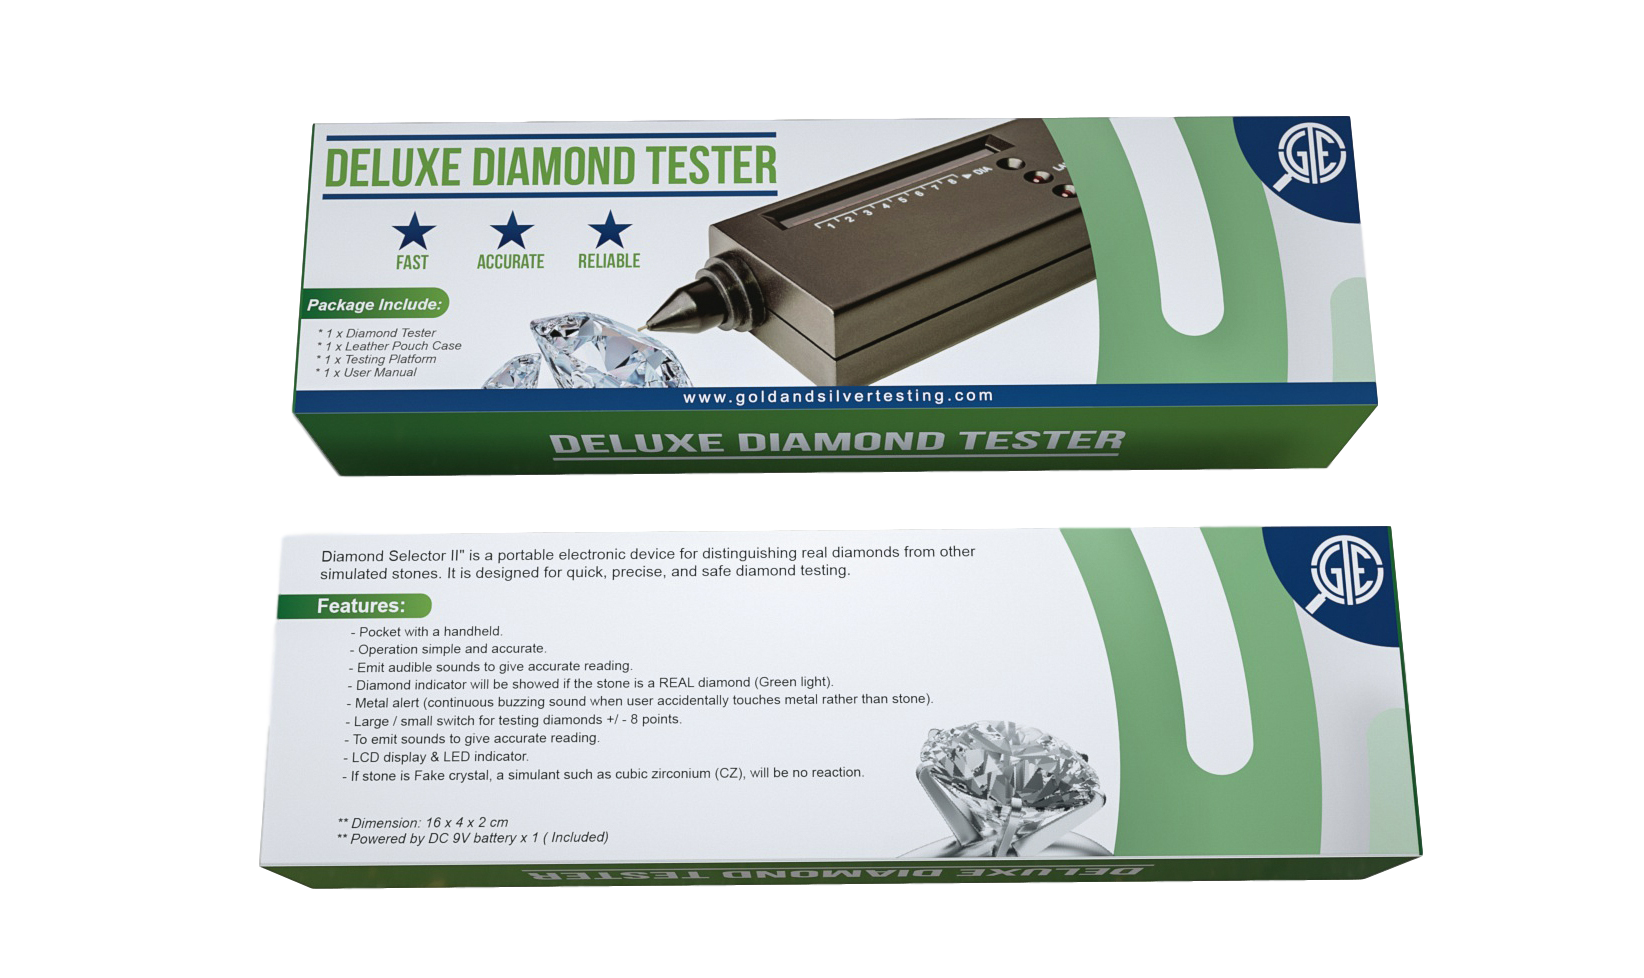 gem tester machine, Testing of Gemstones, real vs fake gemstones, Diamond gem Tester